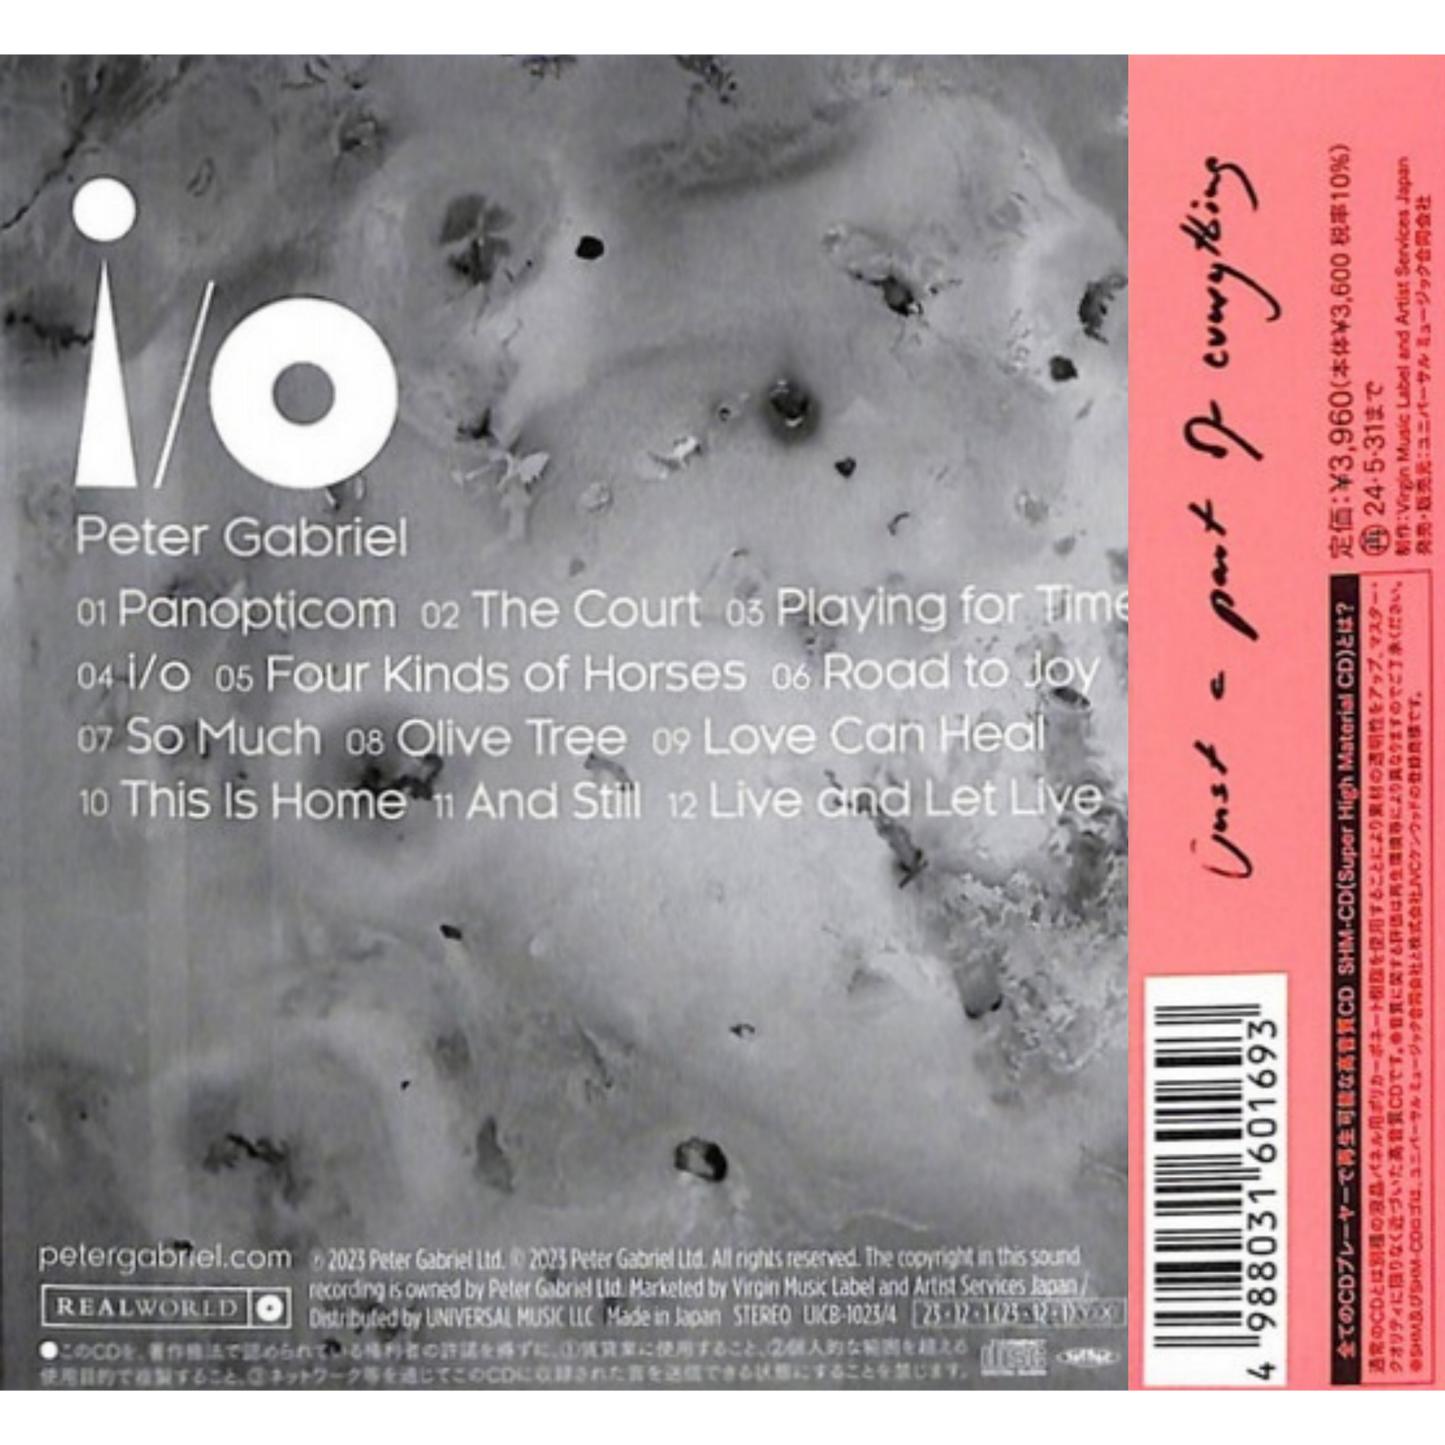 Peter-Gabriel_io_Japanese_2xSHM-CD_Digipak_Album